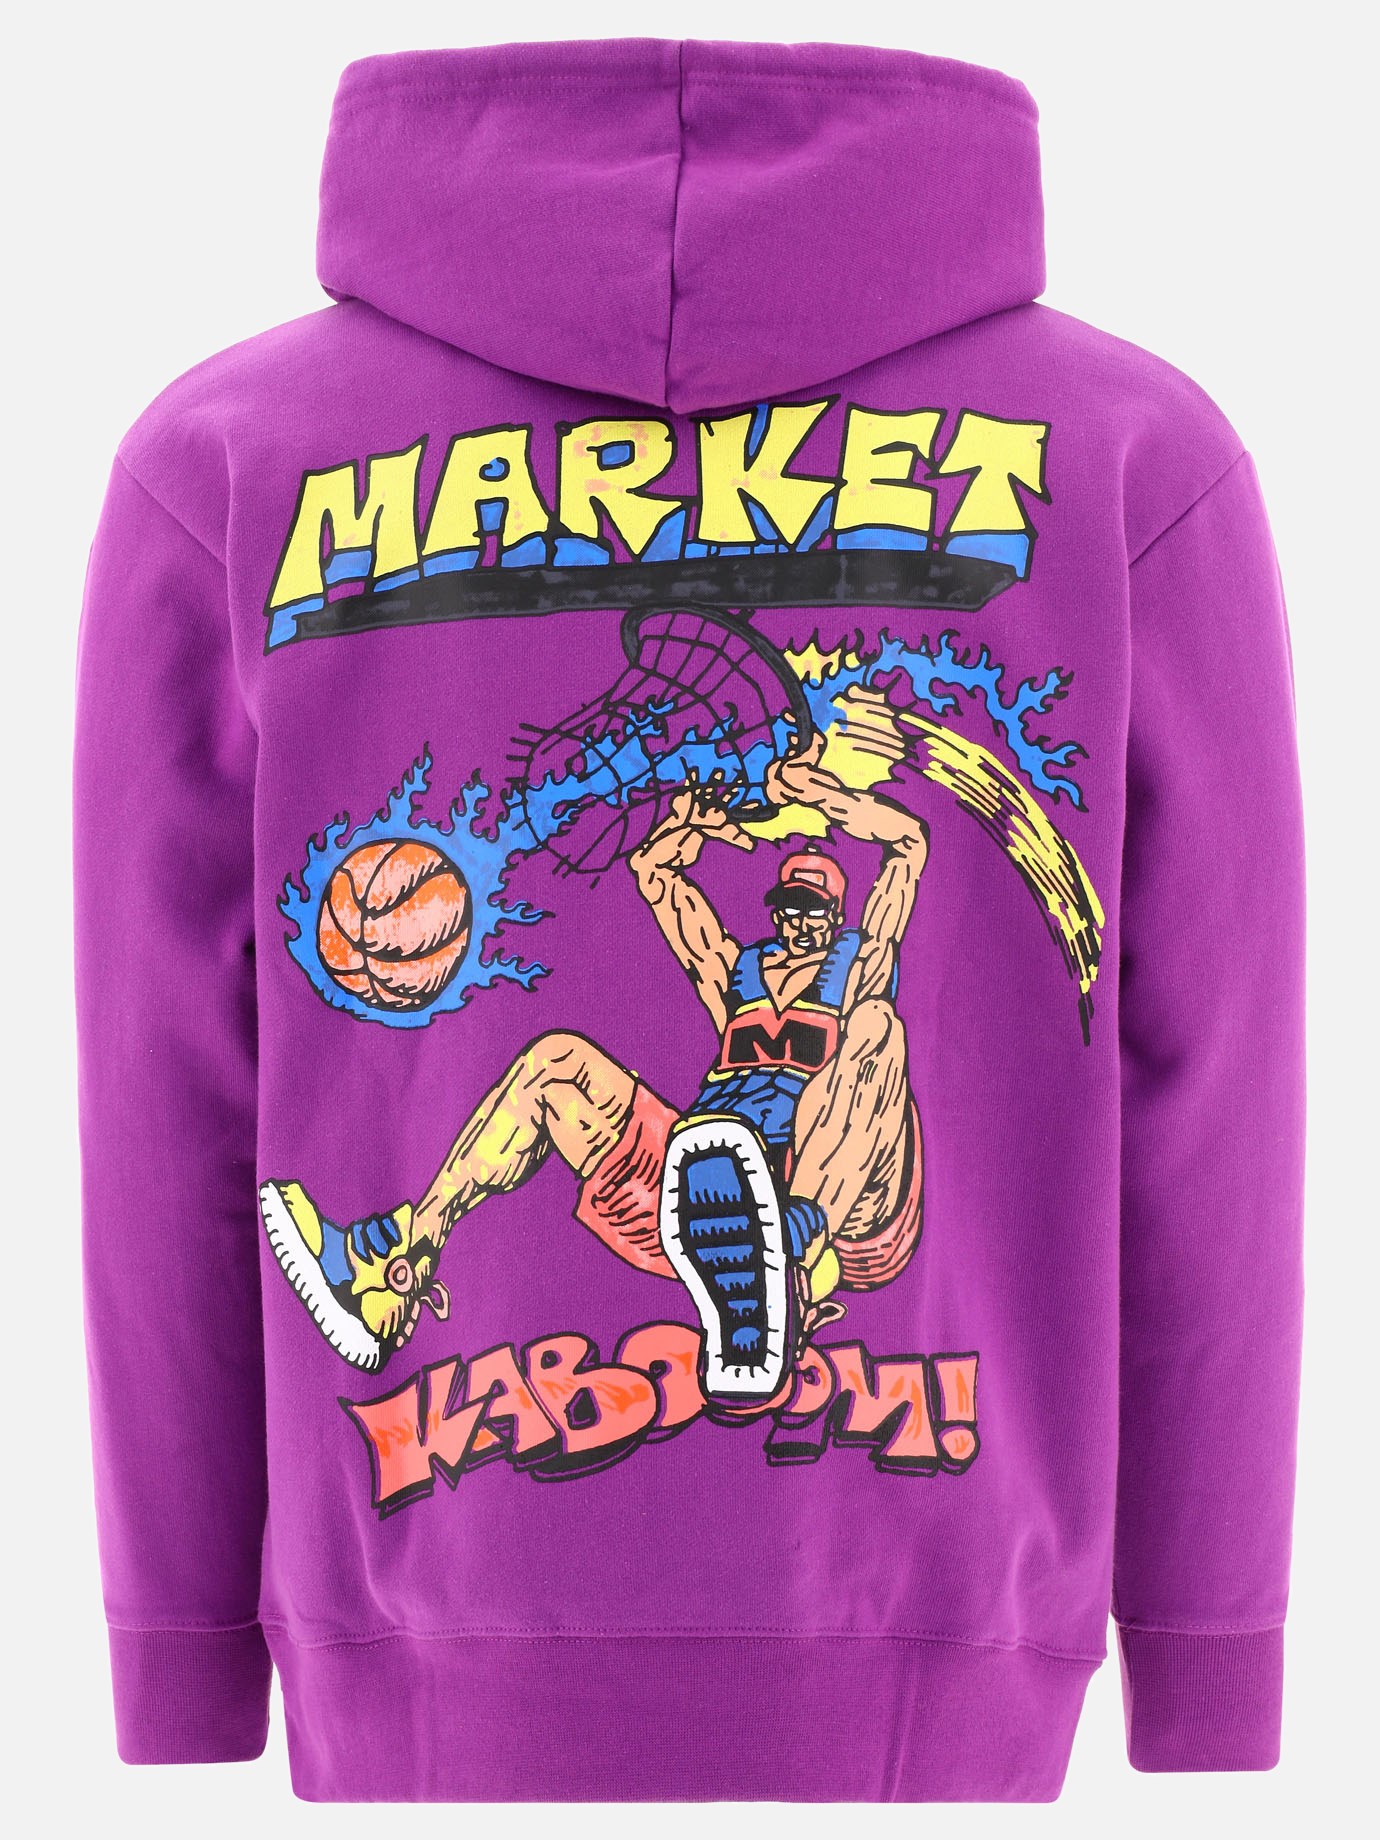  Slam Dunk Cat  hoodie by Market